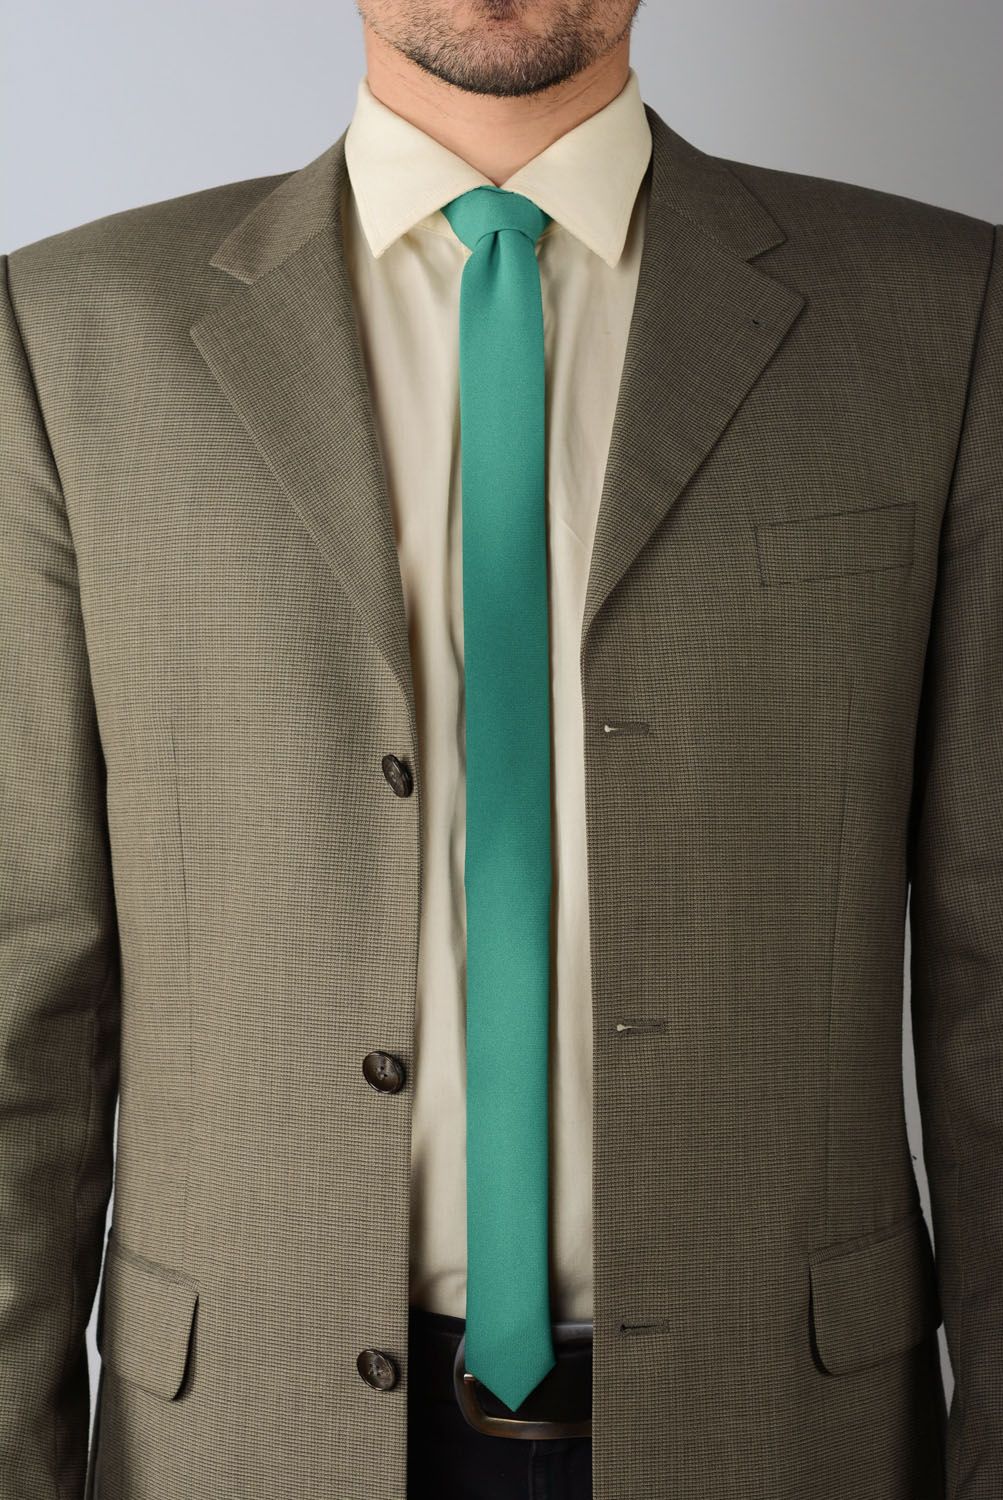 Cravate turquoise en gabardine faite main photo 1